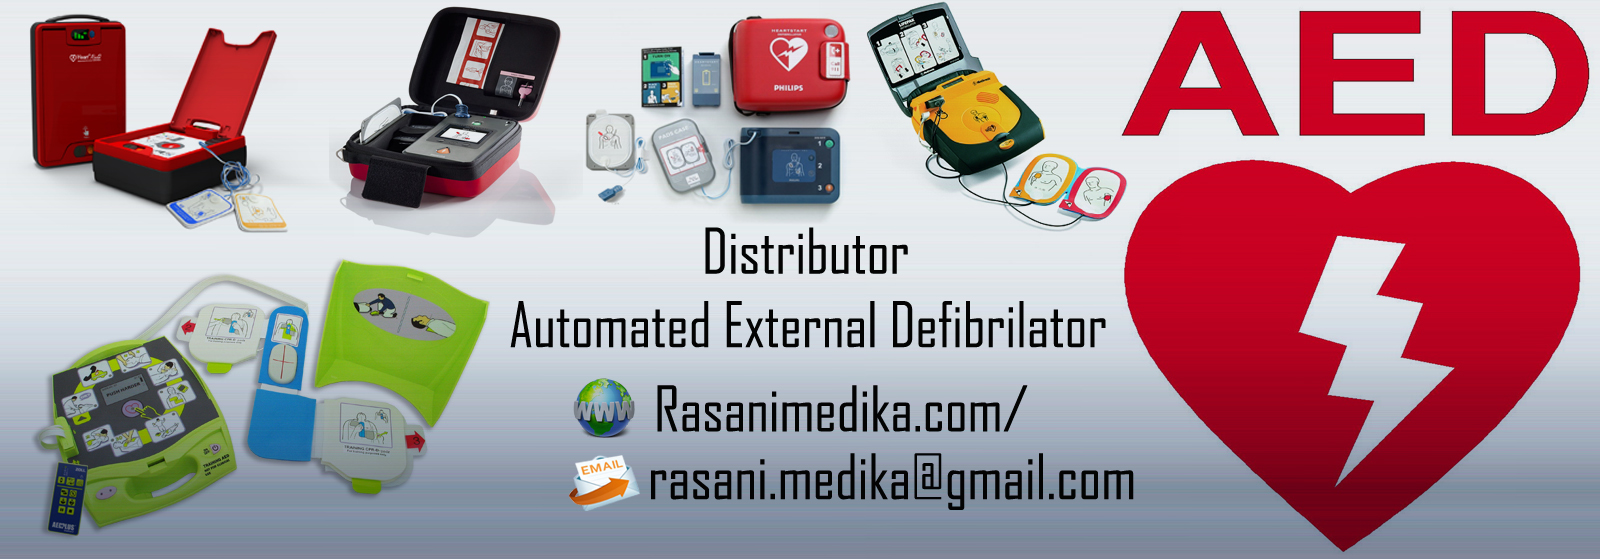 Distributor Resmi Automated External Defibrilator (AED) Jakarta